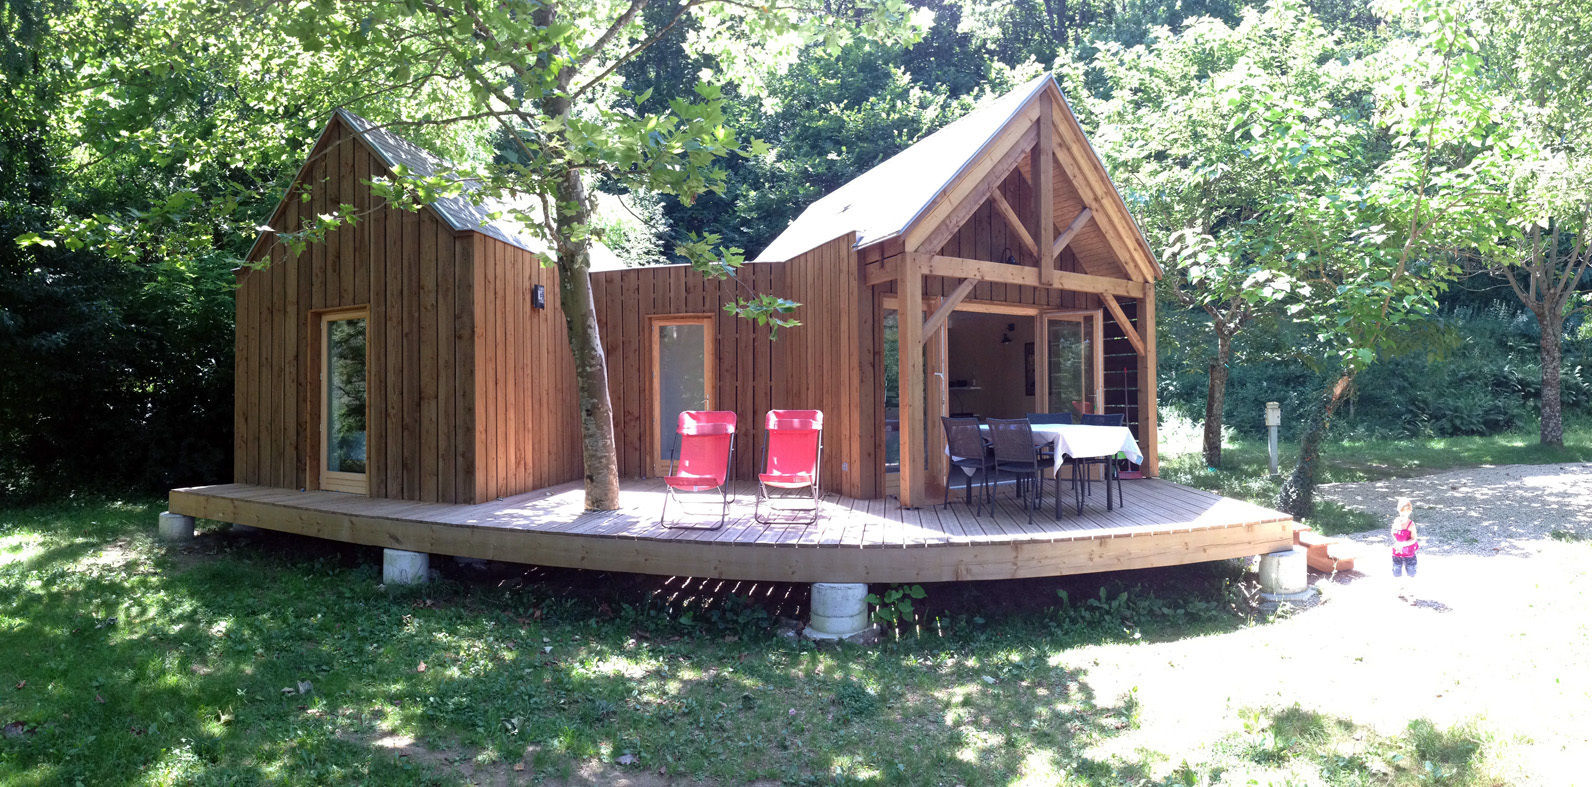 Habitat de loisir en bois - camping les Clots mirandol - bourgnounac, ...architectes ...architectes Ruang Komersial Hotels